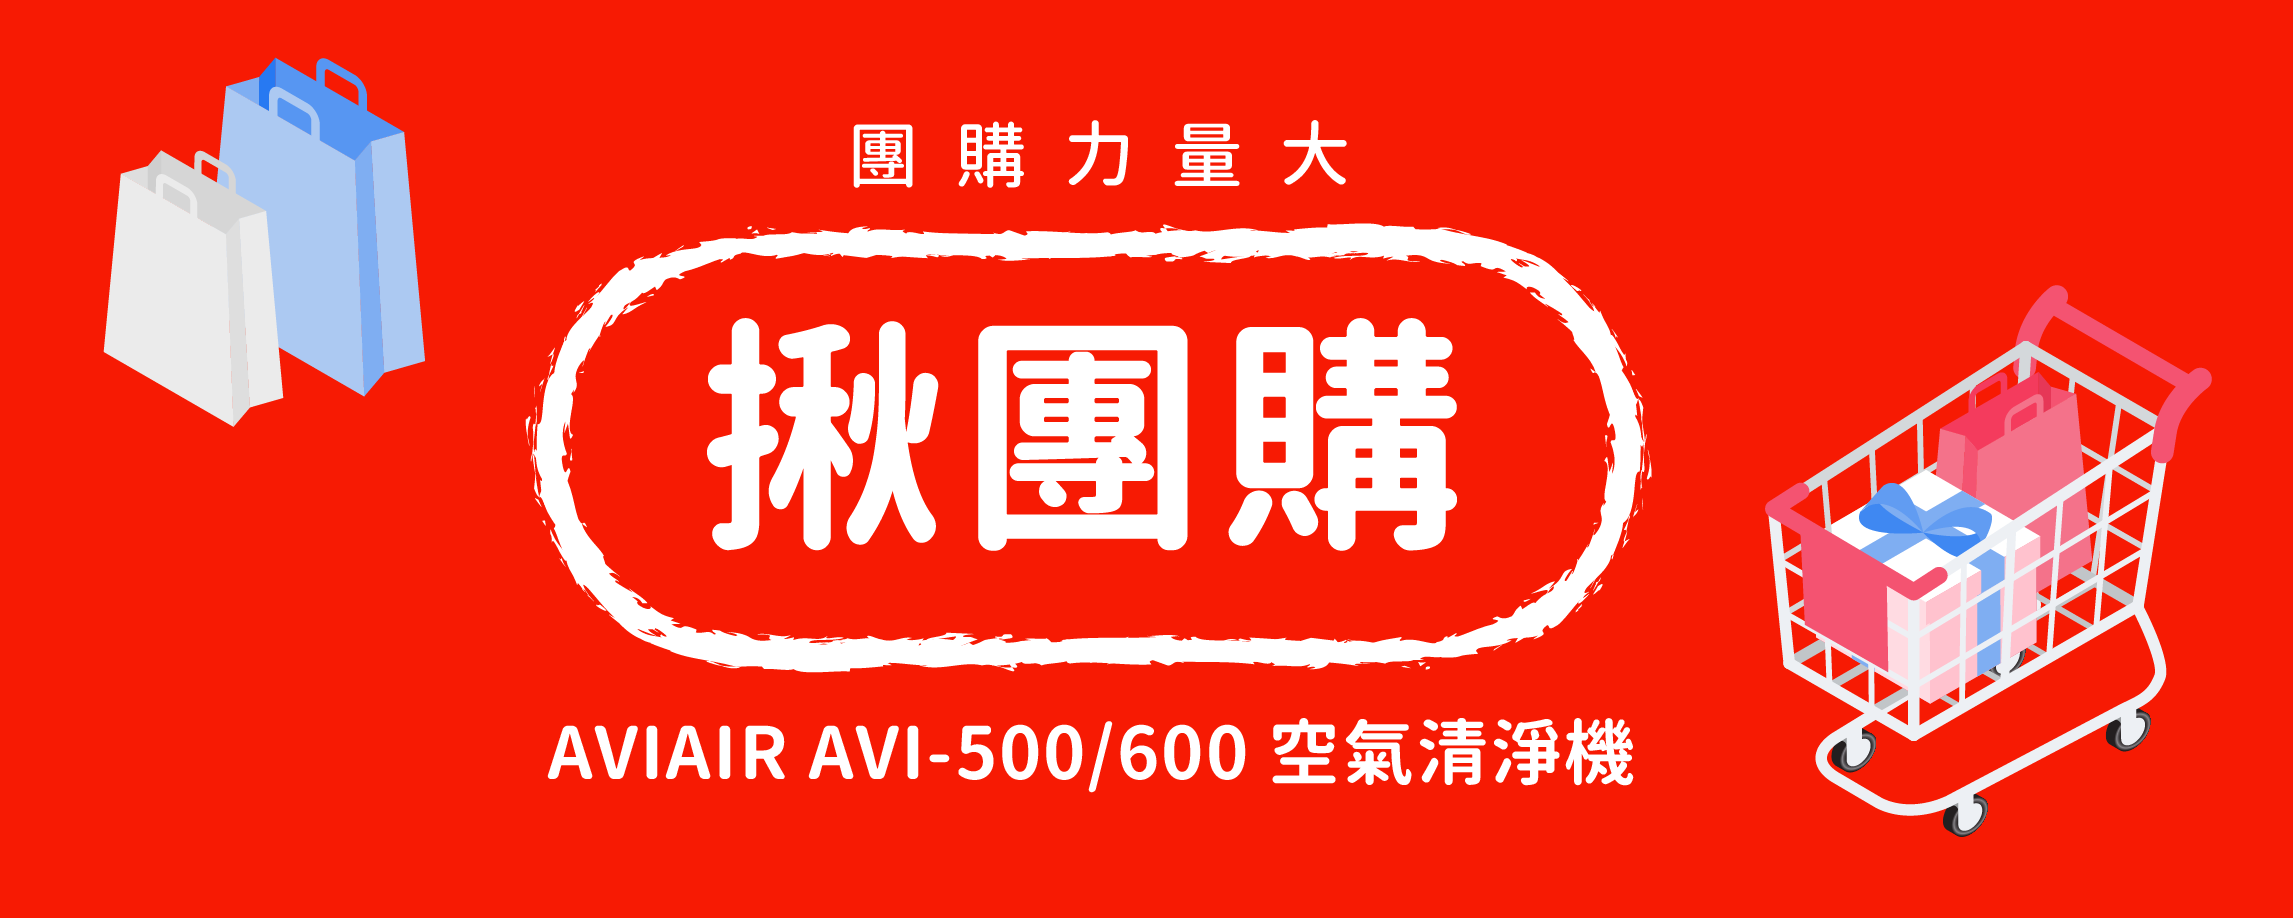 團購AVIAIR空氣清淨機_AVI-500_AVI-600_banner